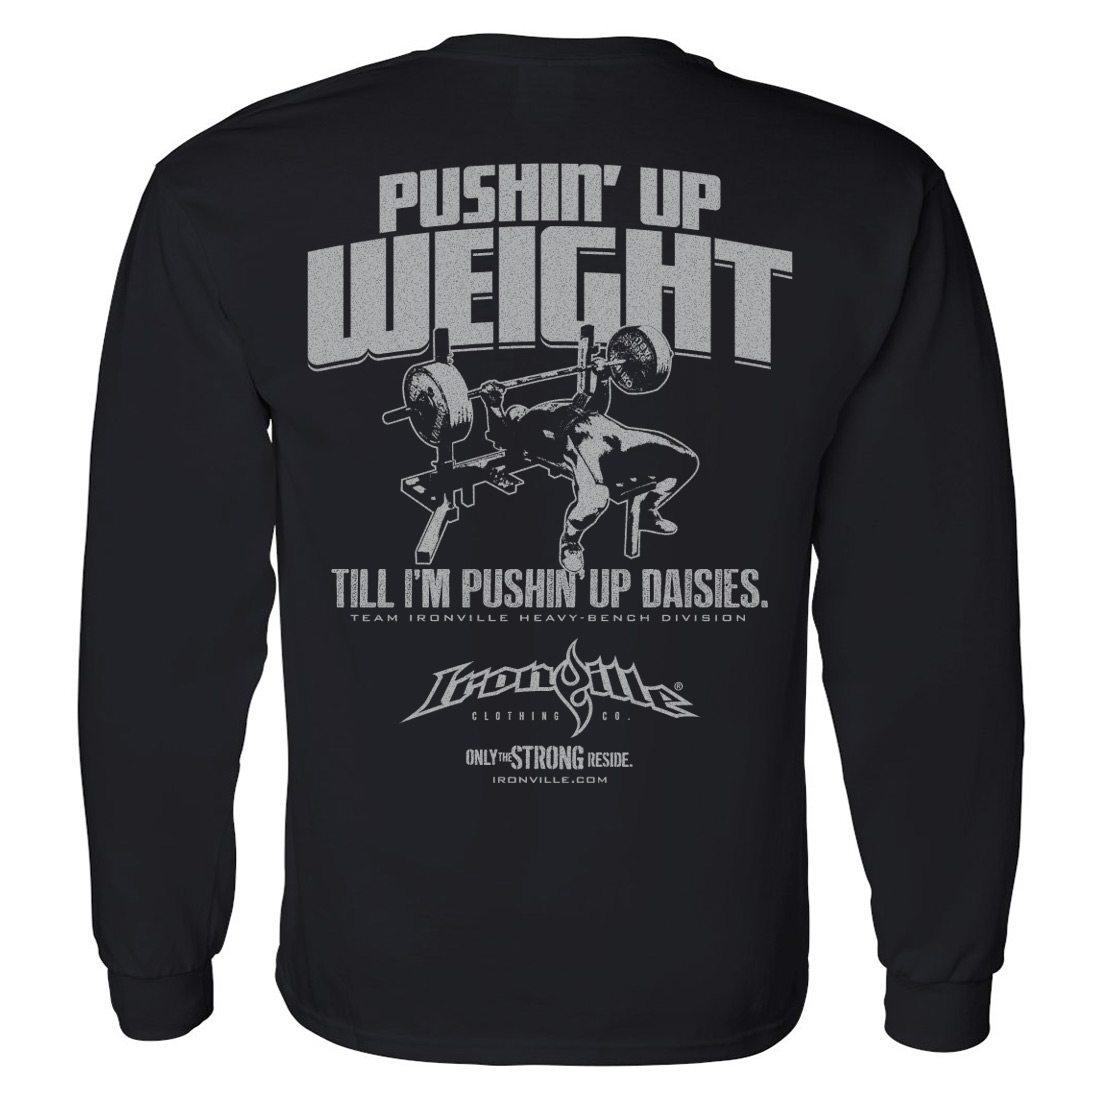 Pushin' Up Weight | Bench Press Long Sleeve T-Shirt | Ironville Clothing